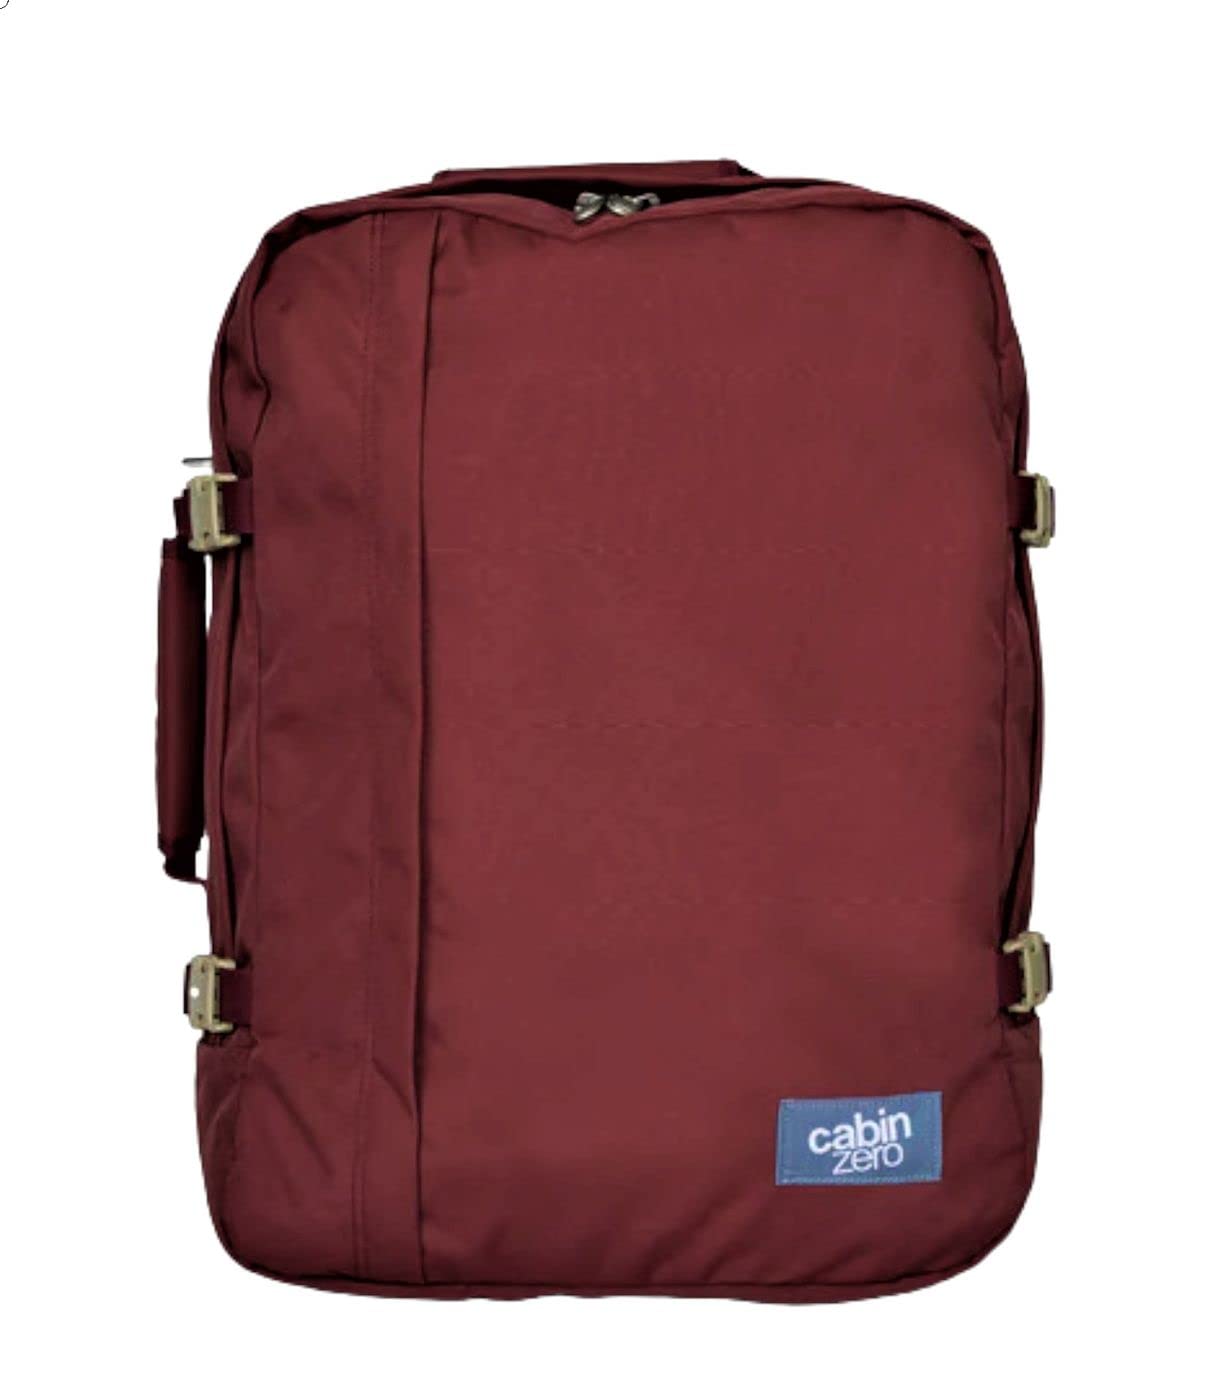 CABINZERO Unisex Classic Backpack 44l Rucksack, Napa Wein, 36x51x19